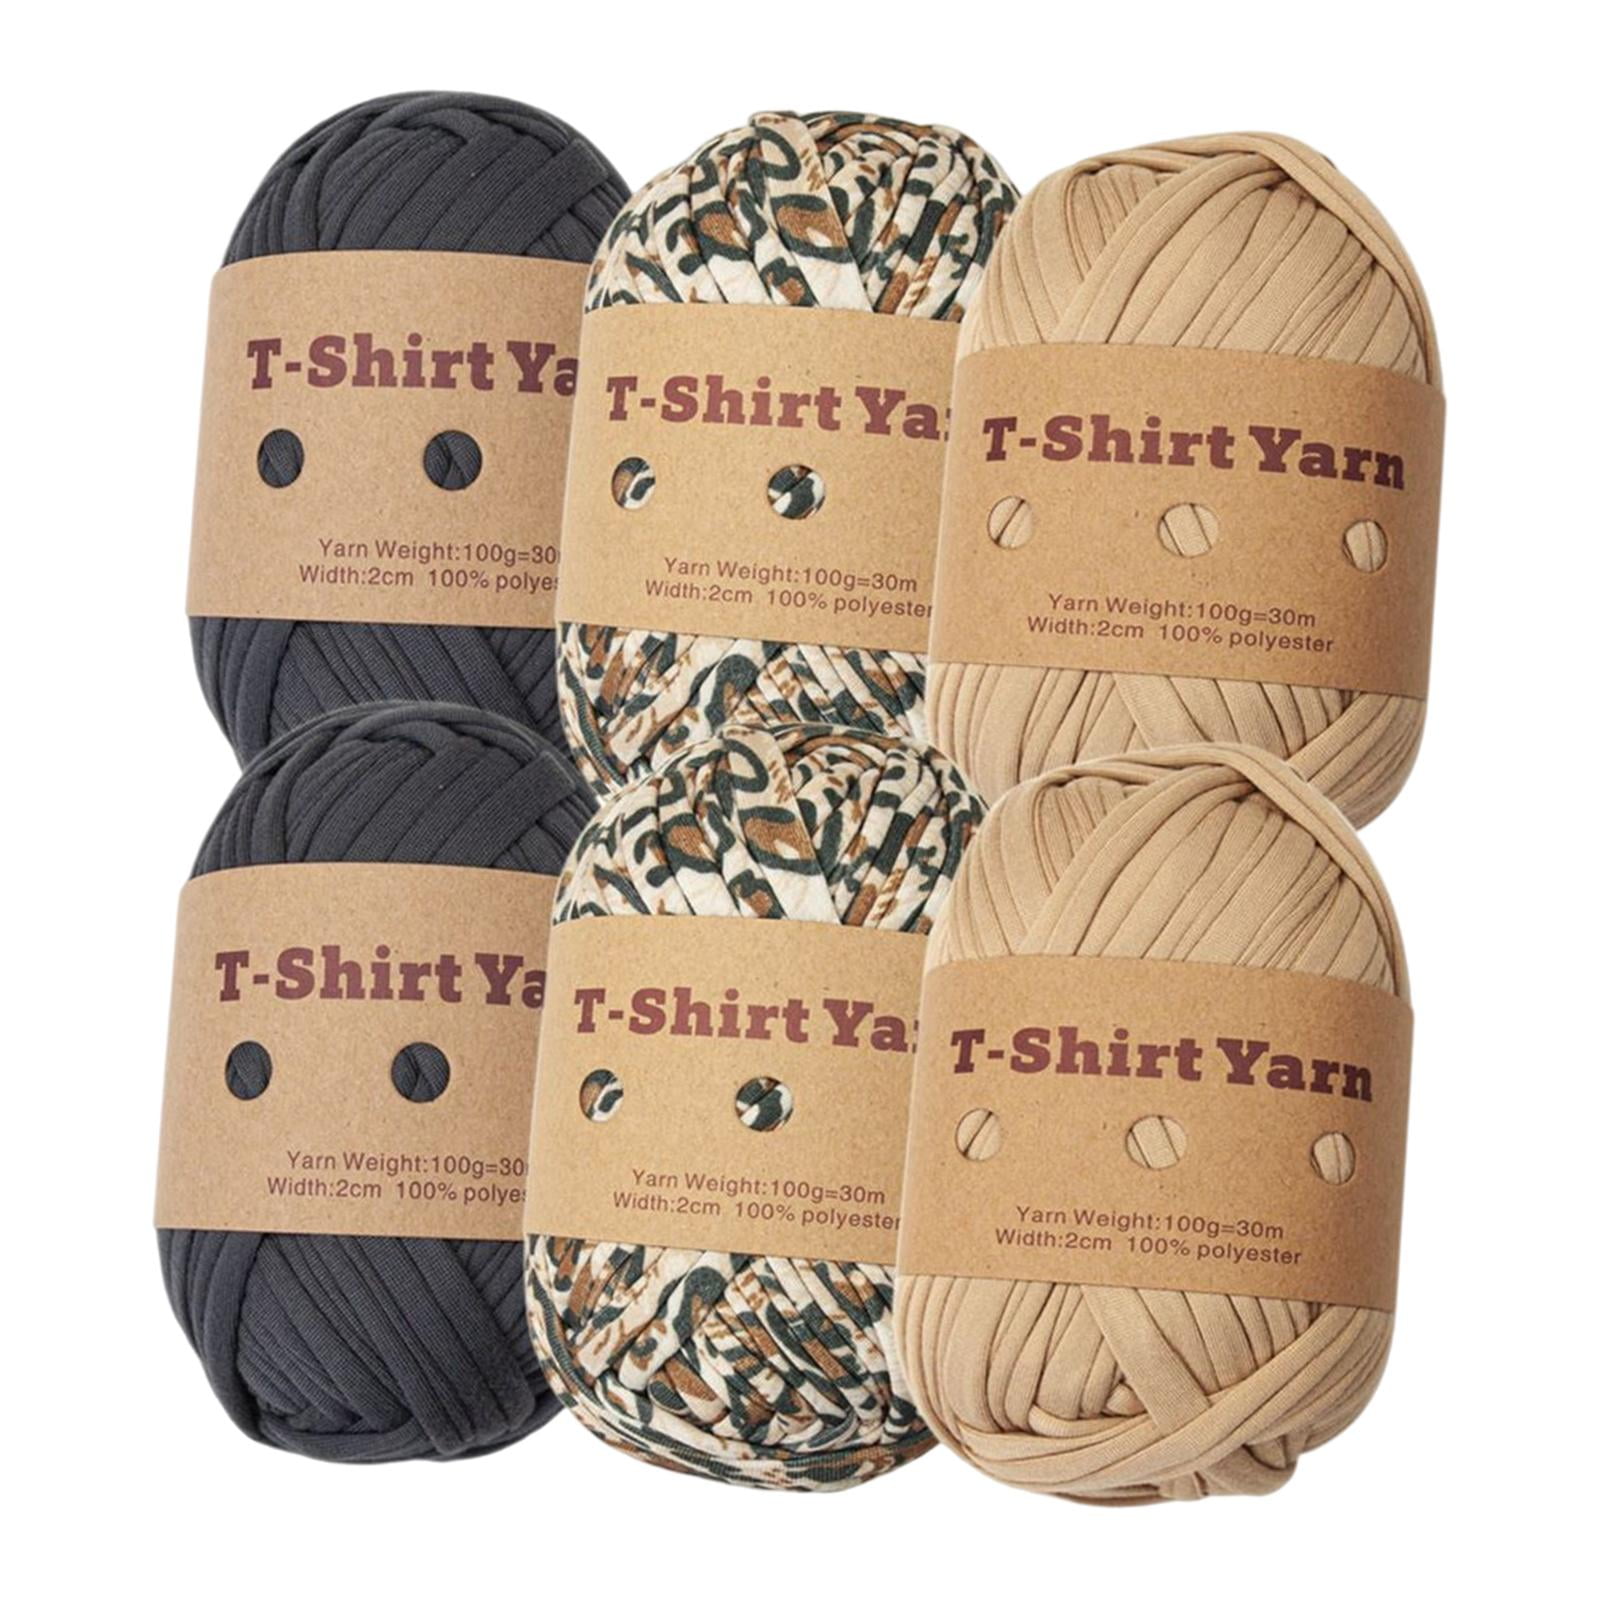  400g T-Shirt Yarn Elastic Fabric Crochet Cloth Yarn for DIY  Knitting, 130 Yards Spaghetti Yarn Thick Knitting Yarn for Hand DIY Bag  Basket Cushion Crocheting Projects,Home Decor(Purple)